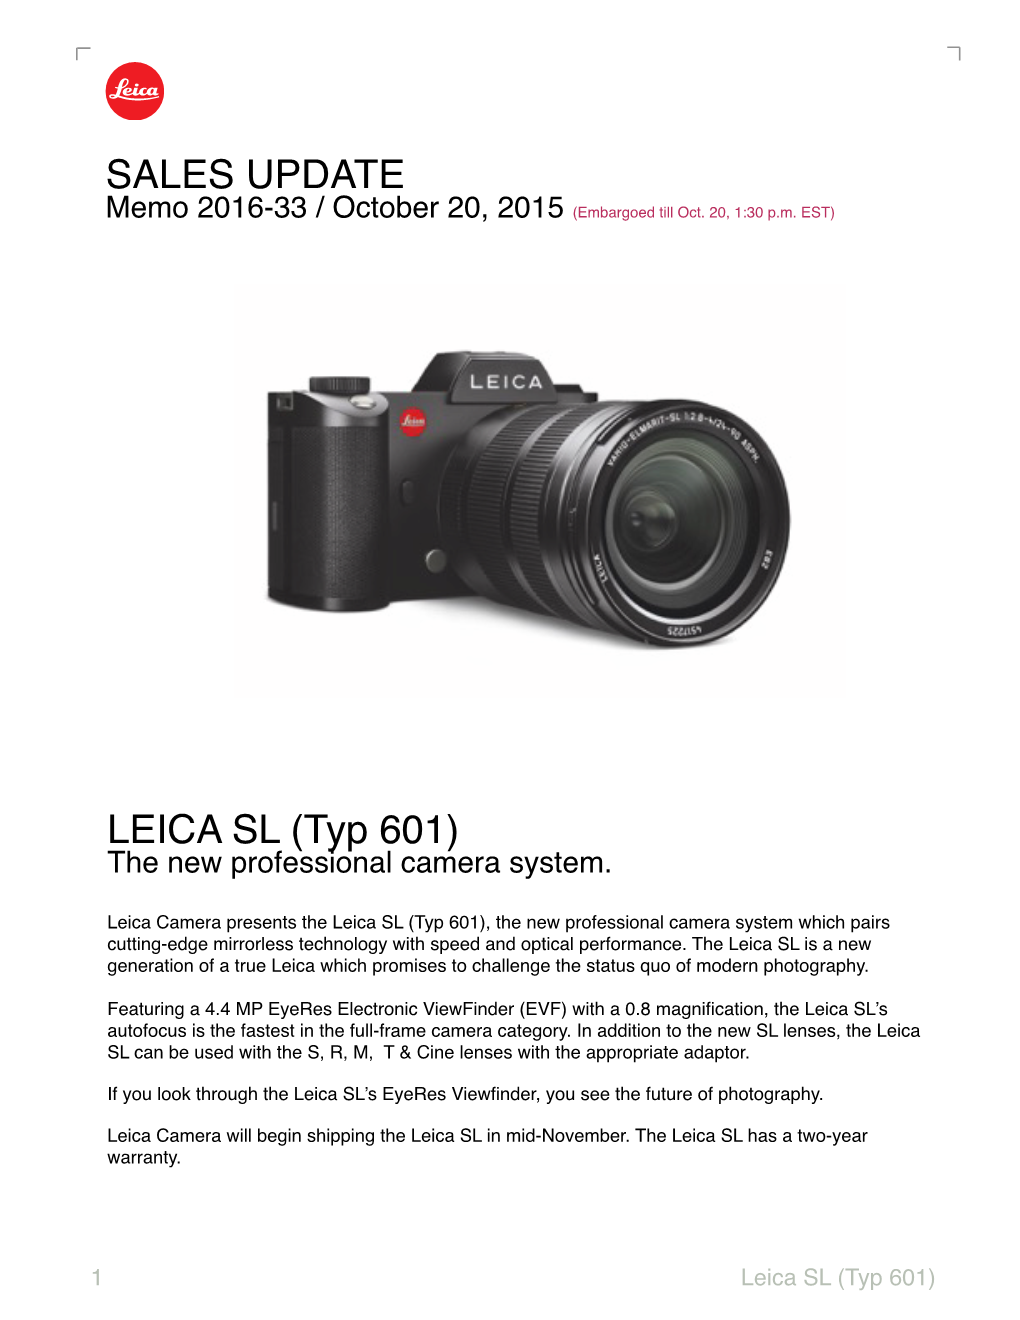 Memo 2016 Leica SL (Typ 601)